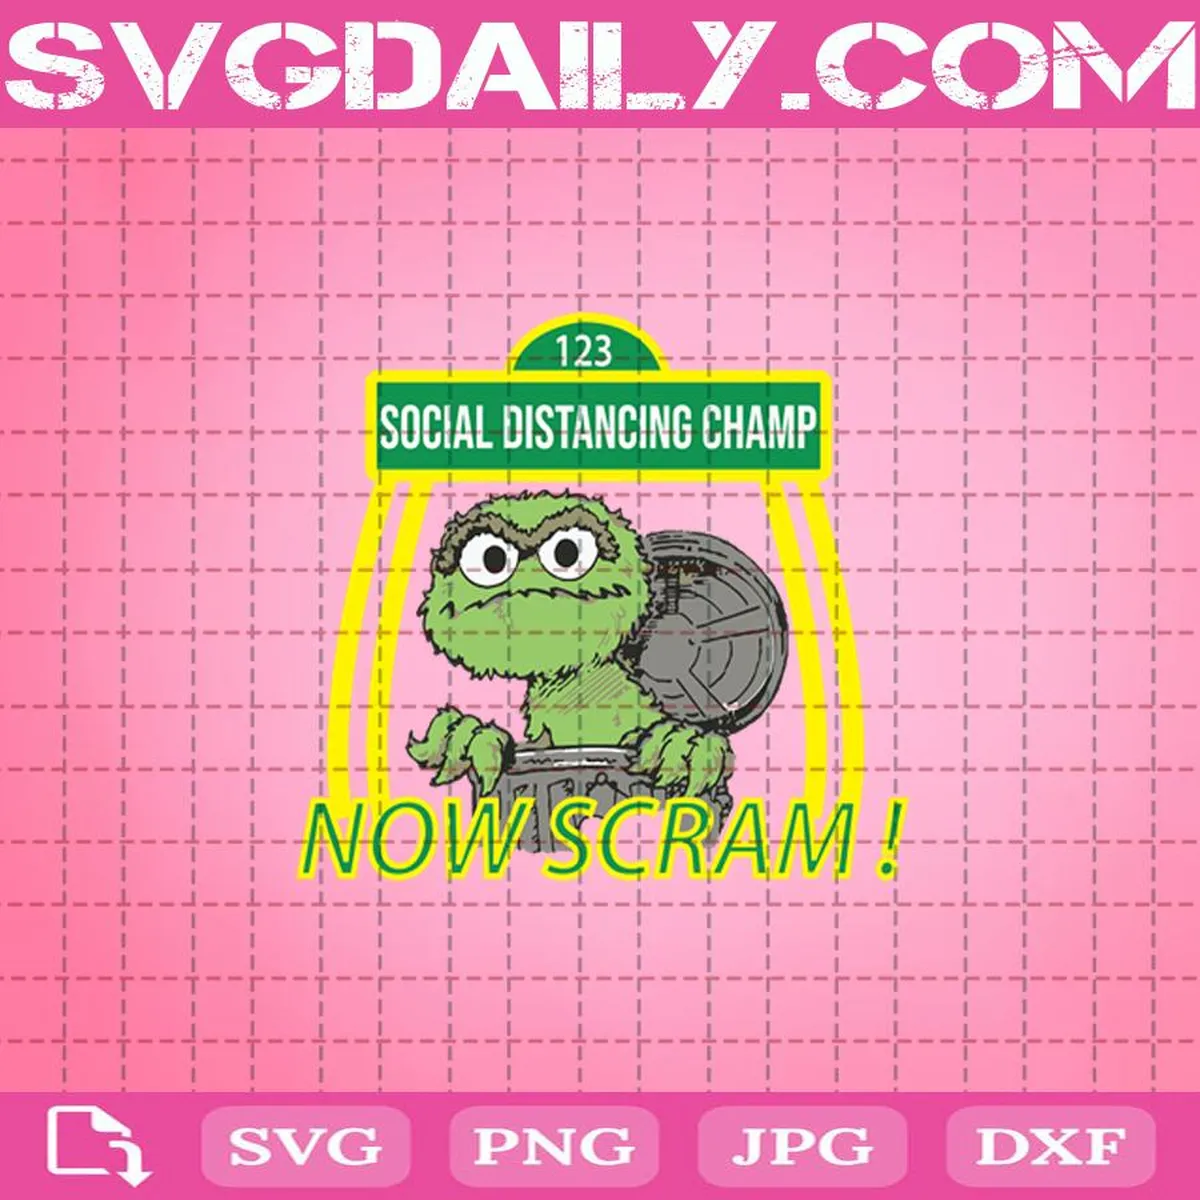 Social Distancing Champ Now Scram Svg, Cricut Files, Clip Art, Instant Download, Digital Files, Svg, Png, Eps, Dxf